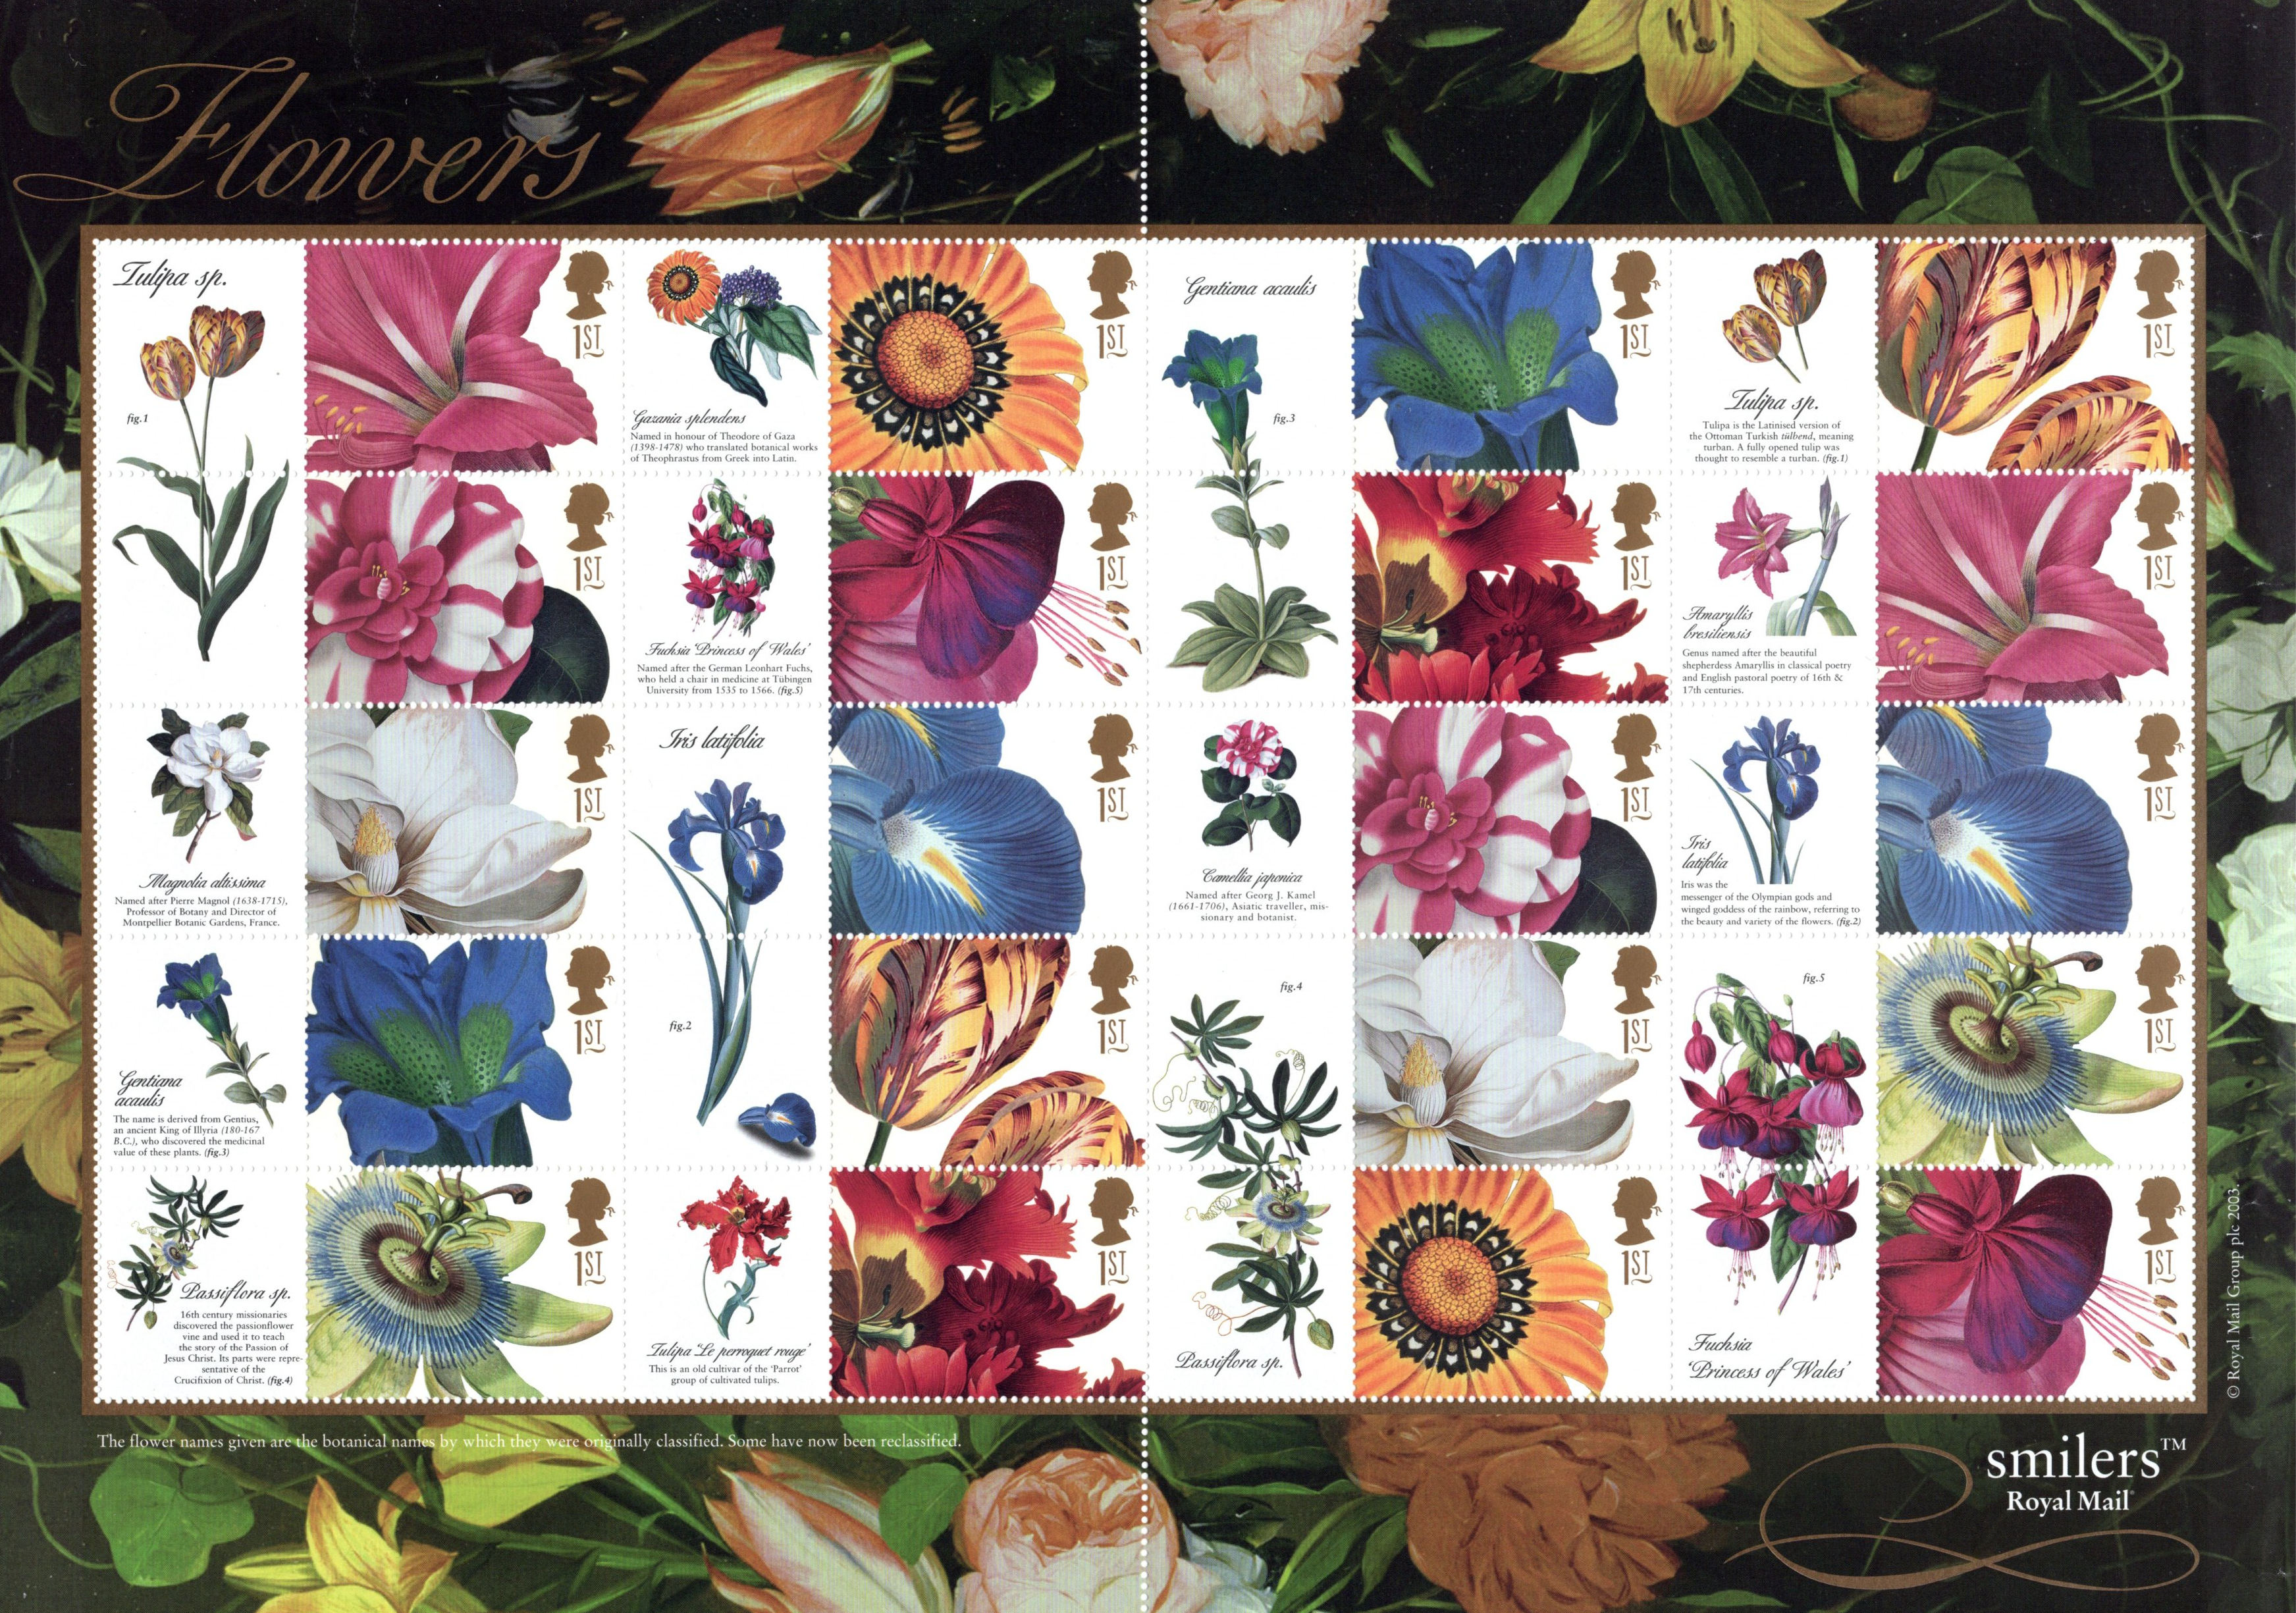 Gb collection. Цветы 2003 - Звёздная коллекция. Коллекция Kc книга. Flowers collection in one Sheet.